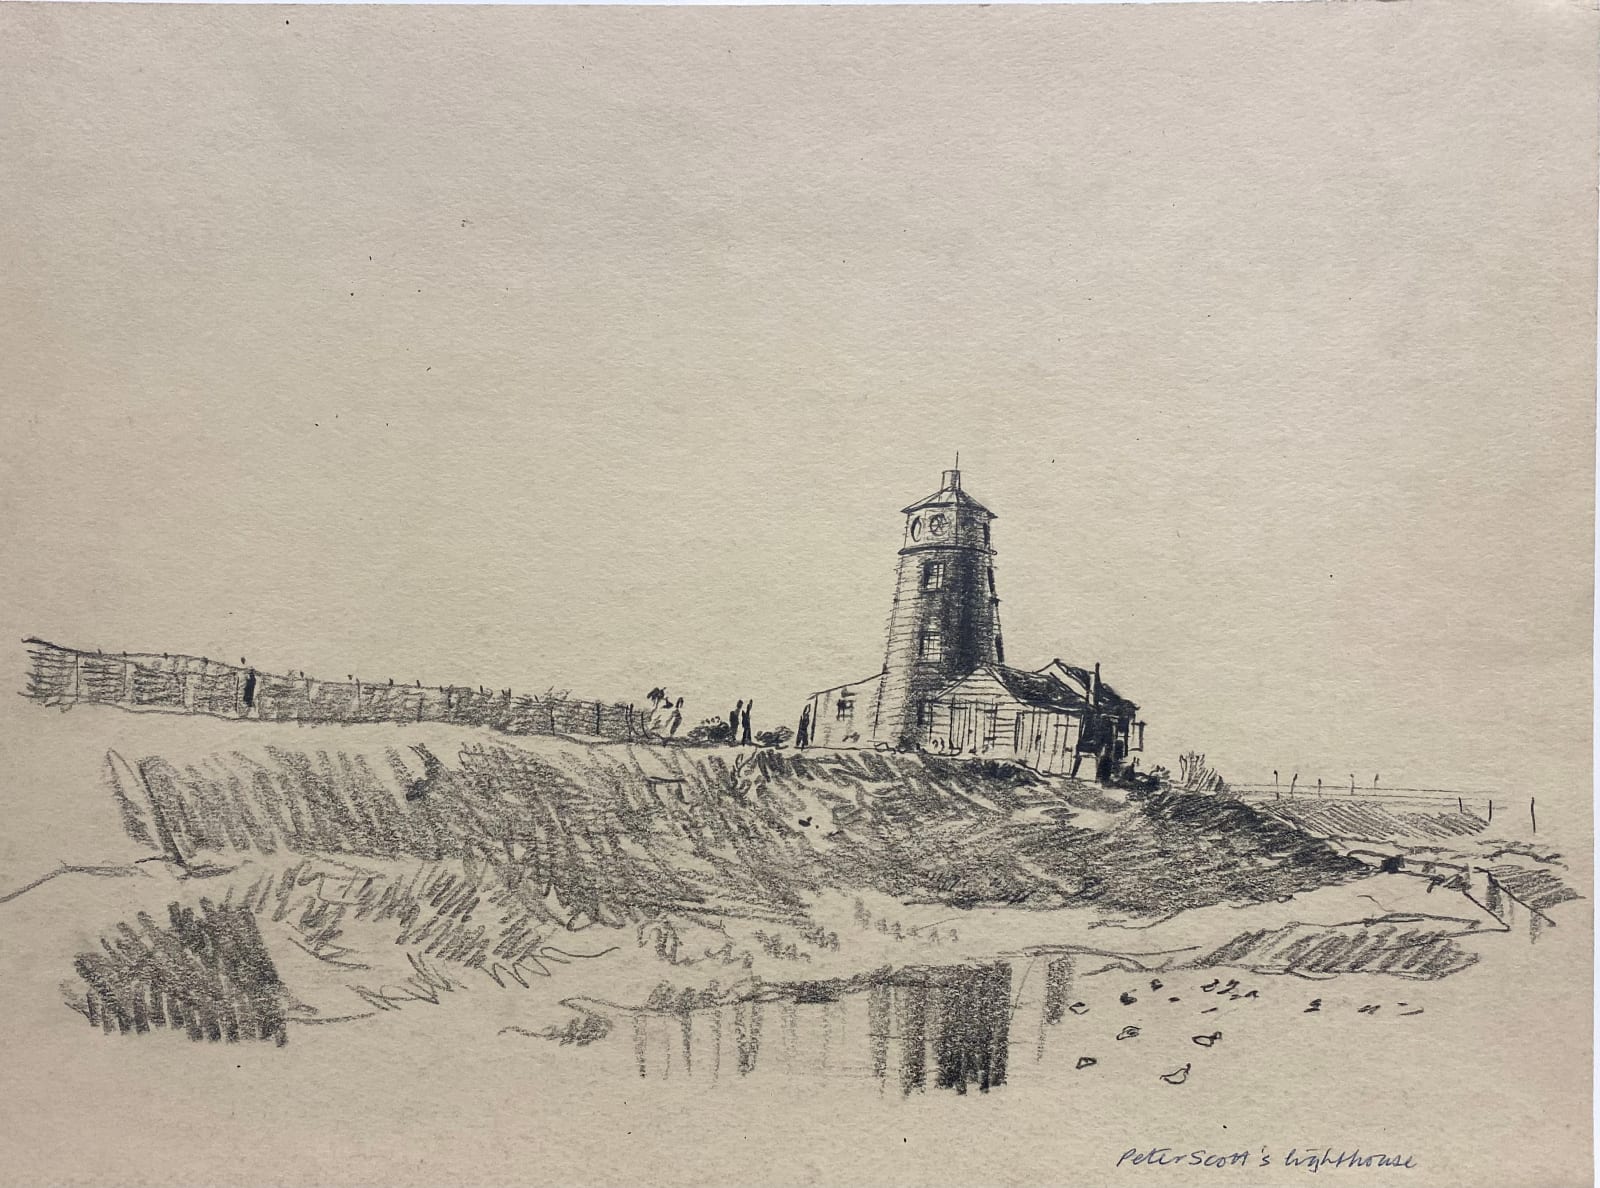 Roland Collins, Peter Scott's Lighthouse, Lincs